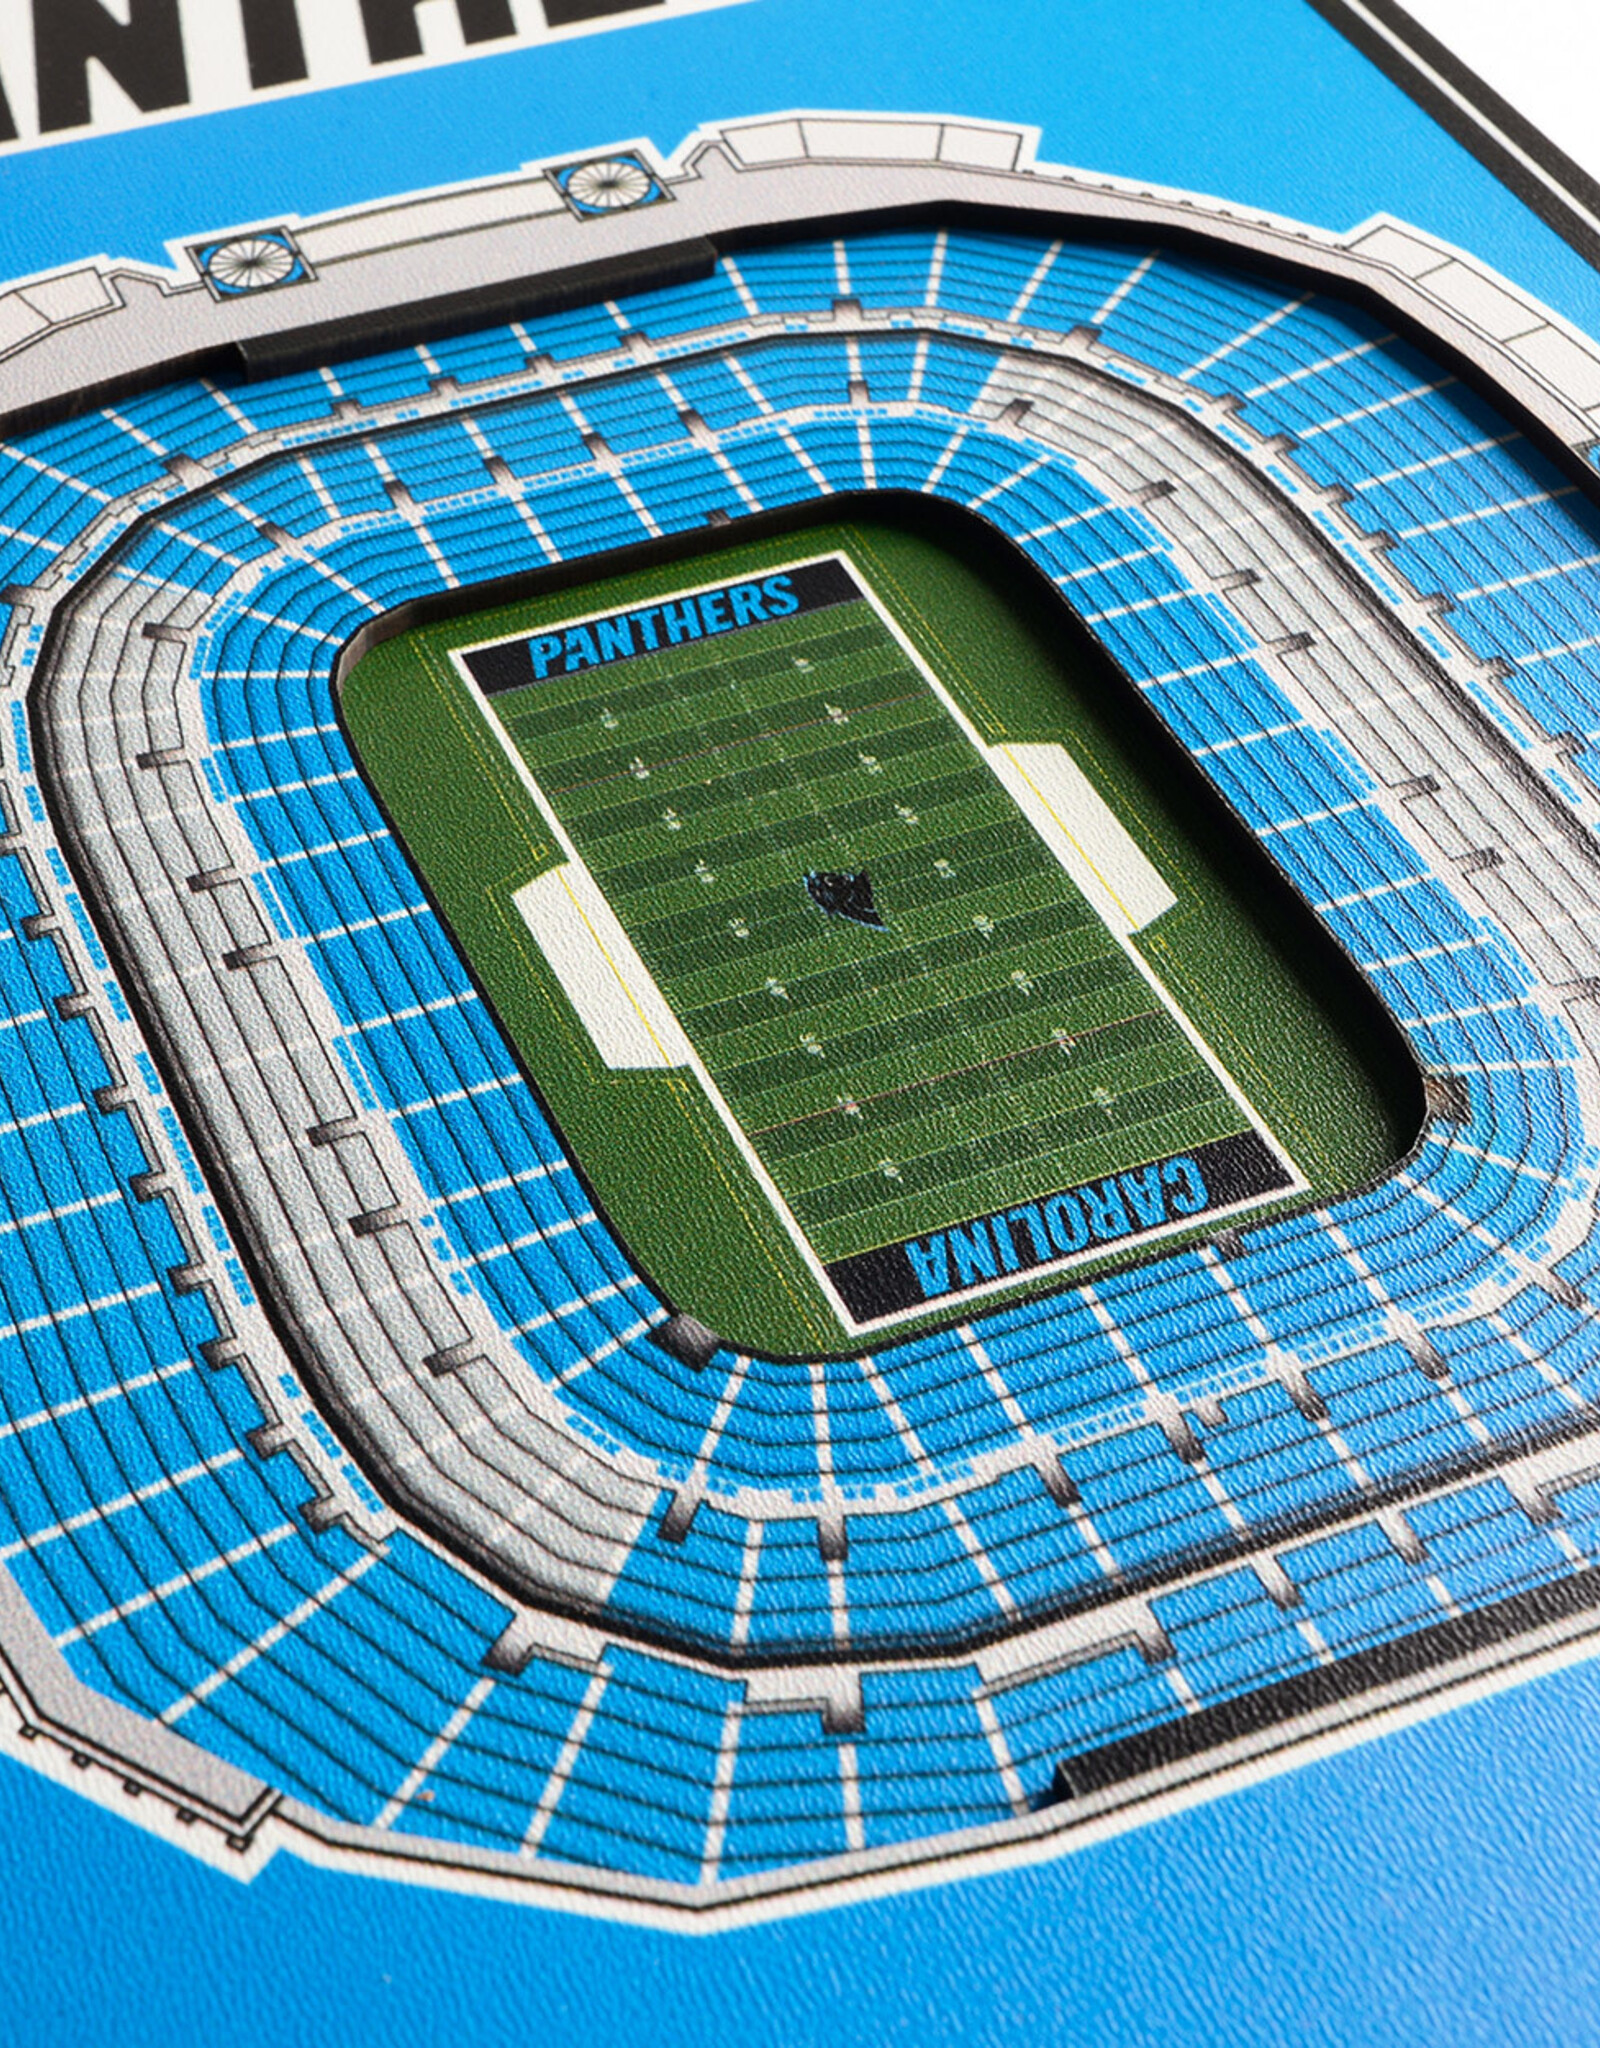 YOU THE FAN Carolina Panthers 3D StadiumView 8x32 Banner